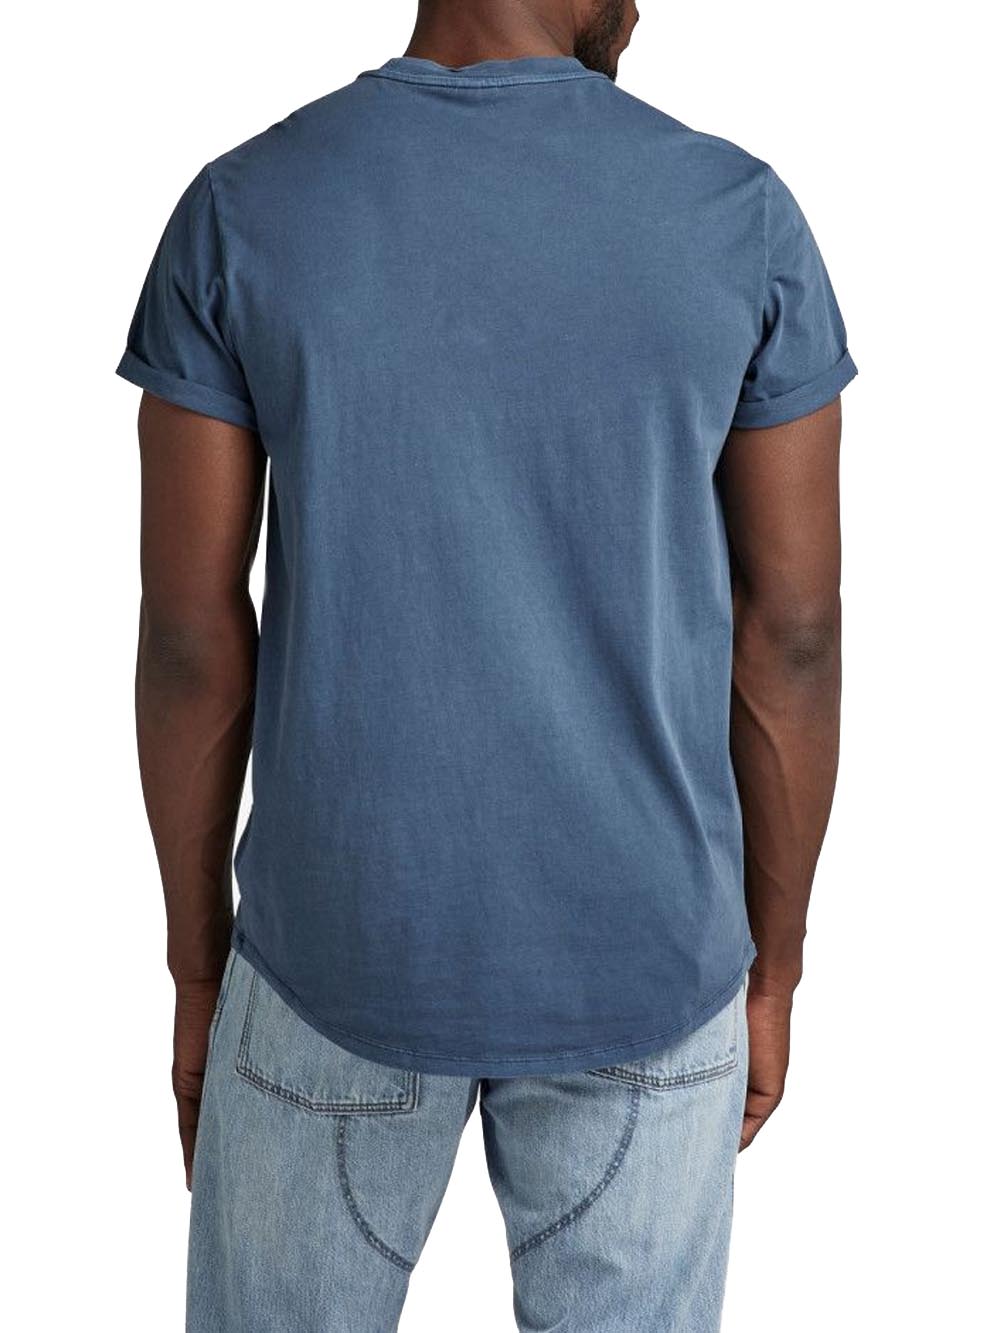 G-Star T-shirt Uomo Blu indaco